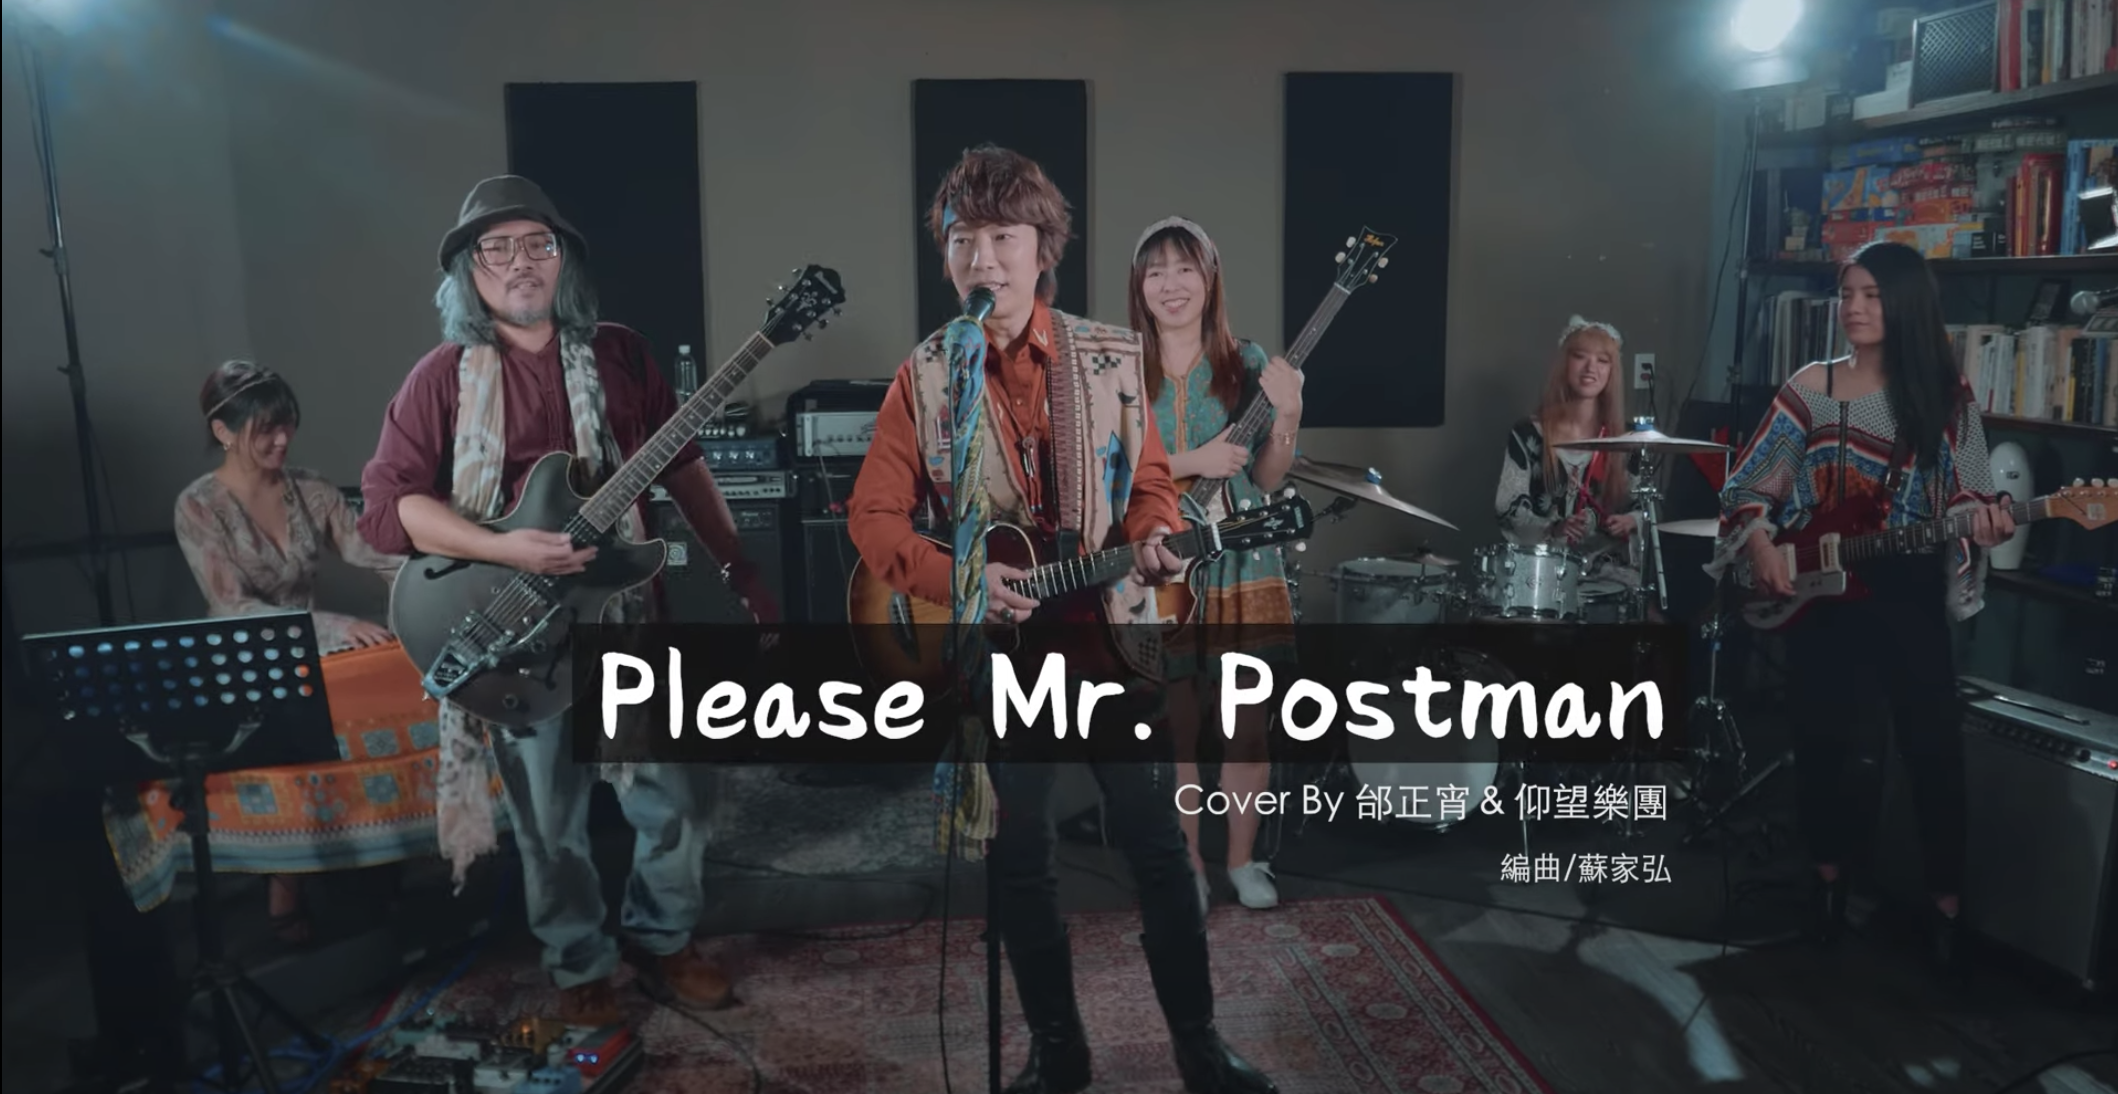 [YouTube] 《Please Mr. Postman》cover by 邰正宵&仰望樂團